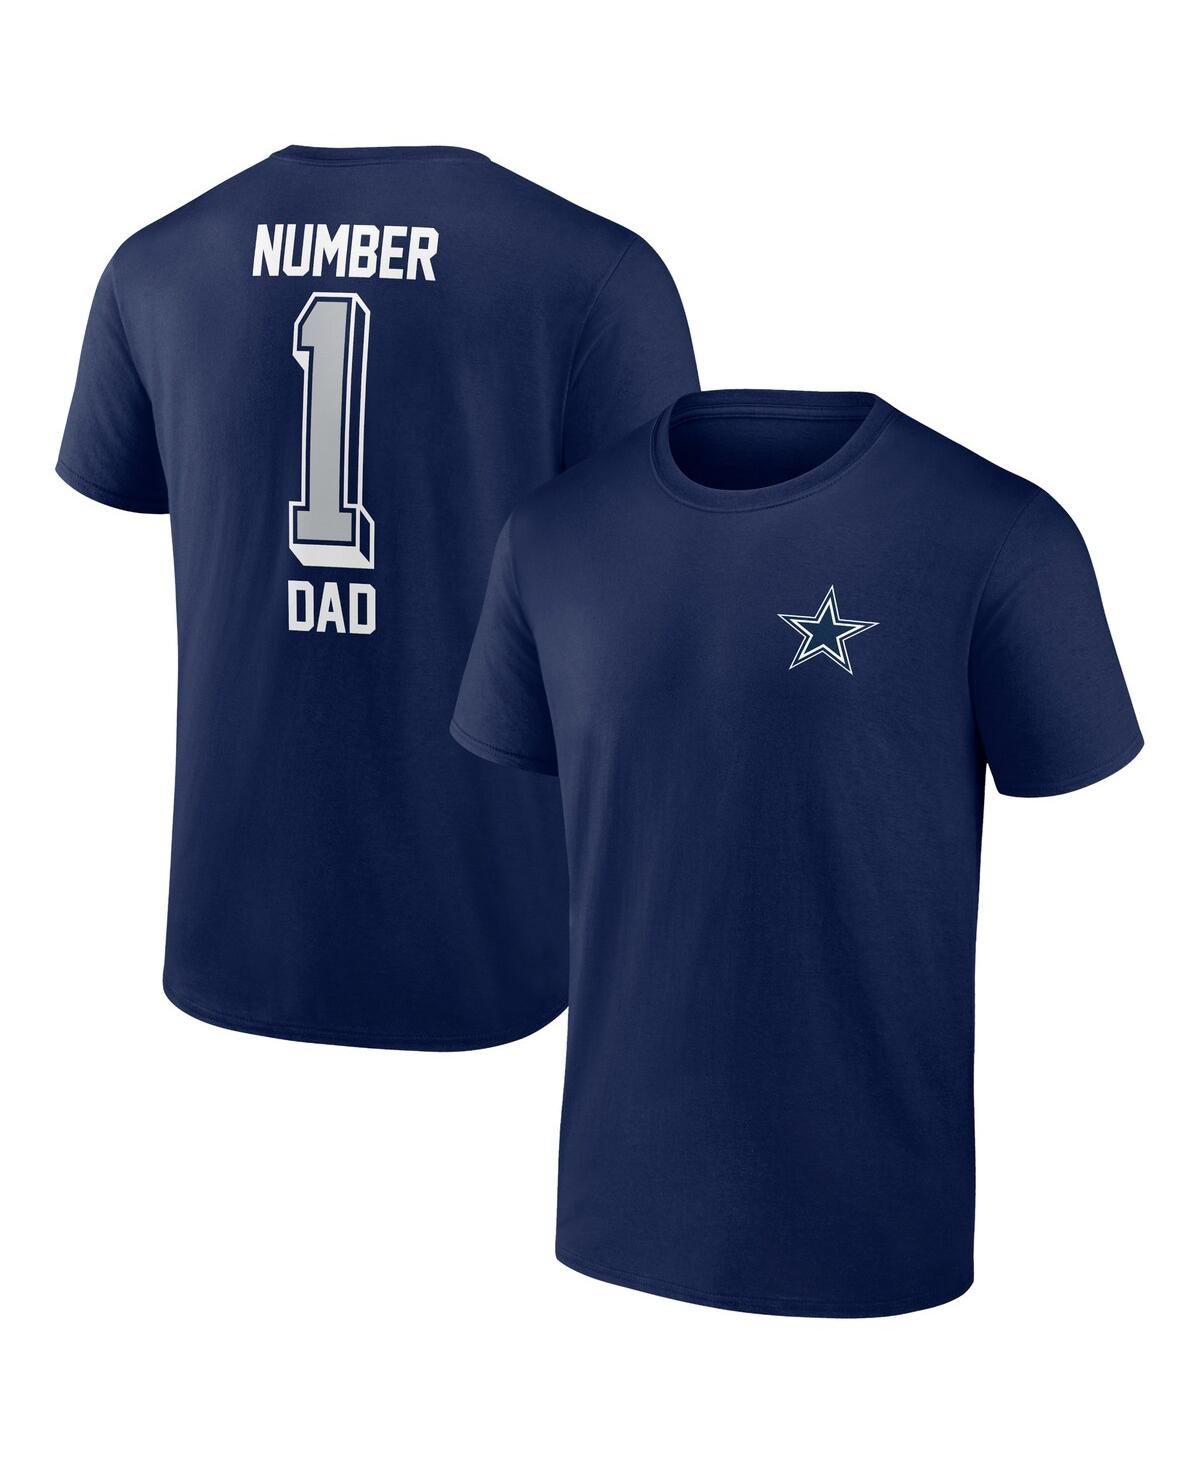 Shop Fanatics Men's  Navy Dallas Cowboys Number One Dad T-shirt